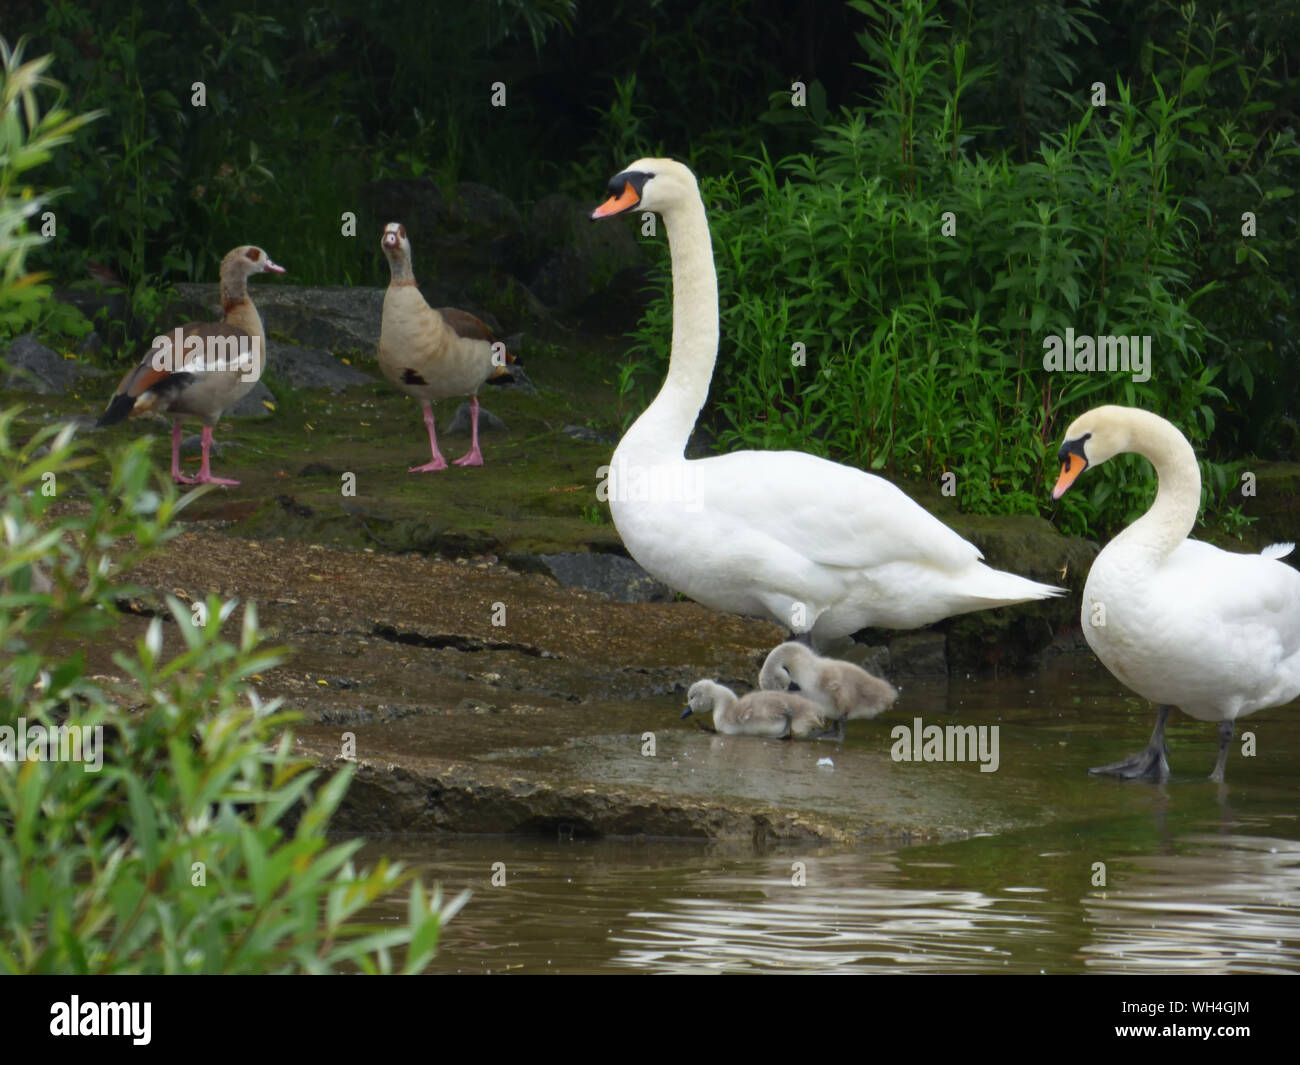 Medium Group Of Birds On Lakeshore Stock Photo